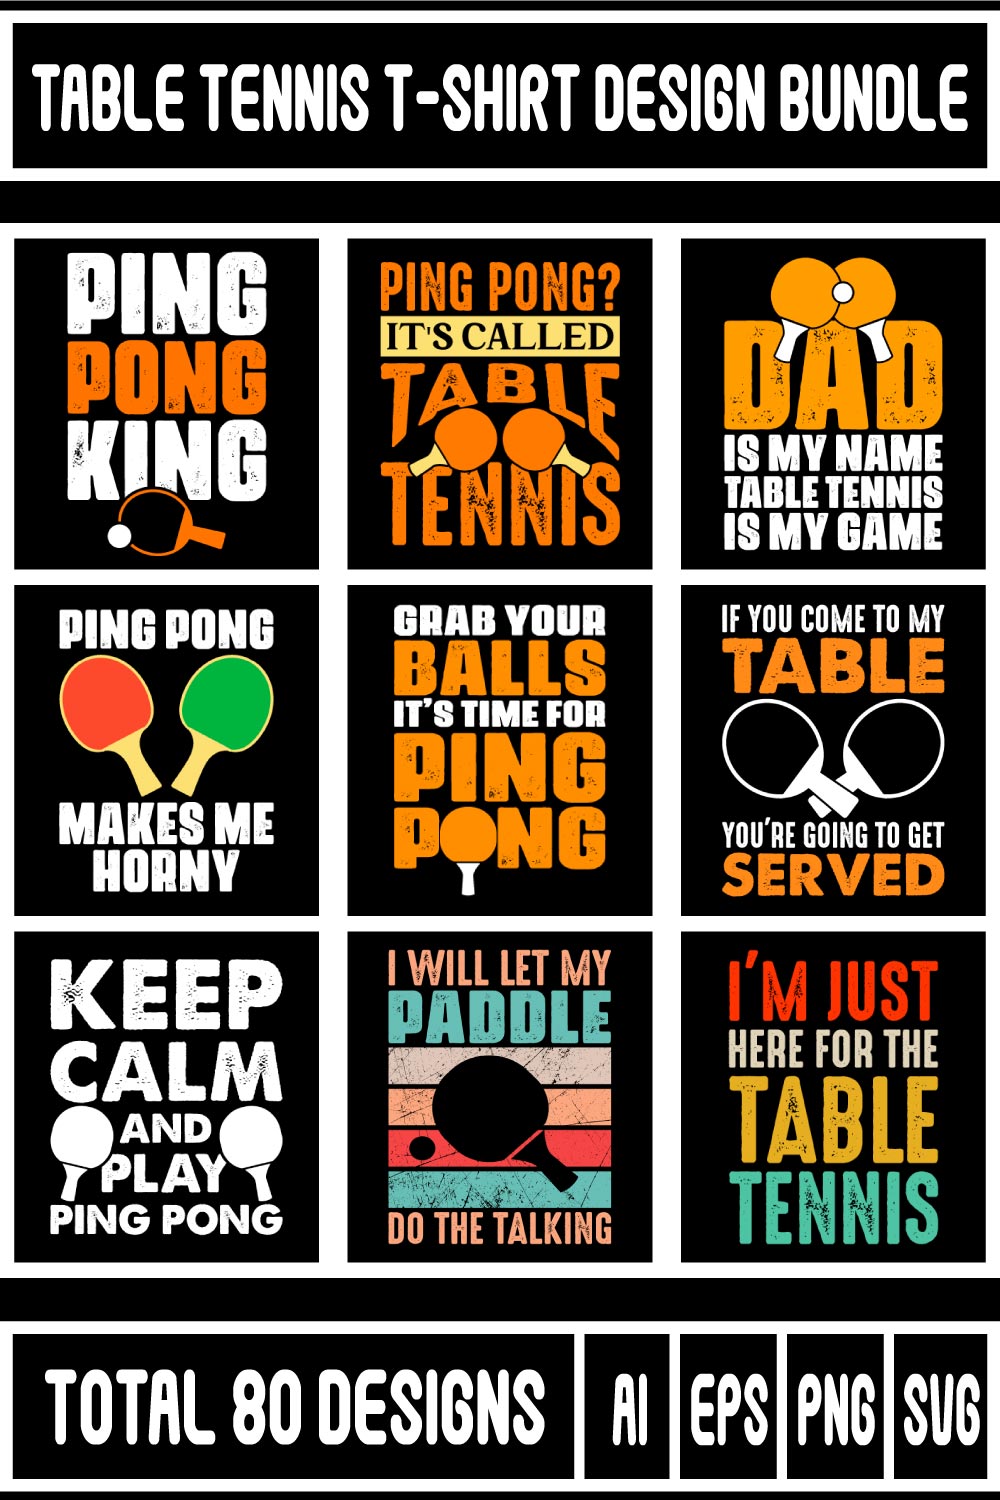 Ping Pong Table Tennis T-shirt Design Bundle pinterest preview image.